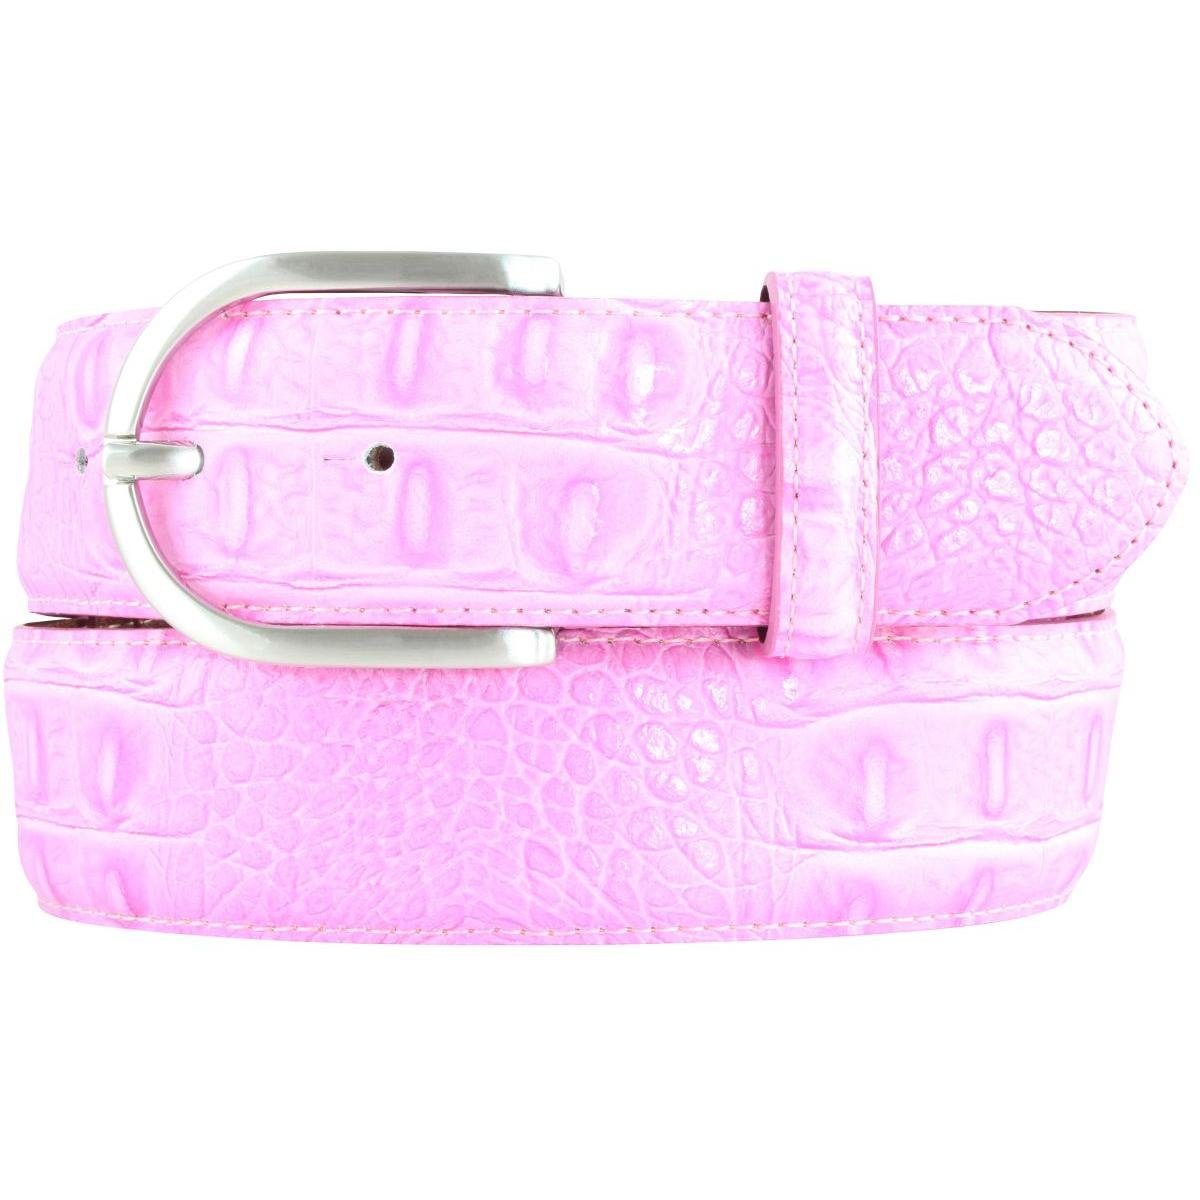 BELTINGER Ledergürtel Damen-Gürtel mit Krokoprägung 4 cm - Leder-Gürtel für Damen 40mm Kroko Pink, Silber | Gürtel